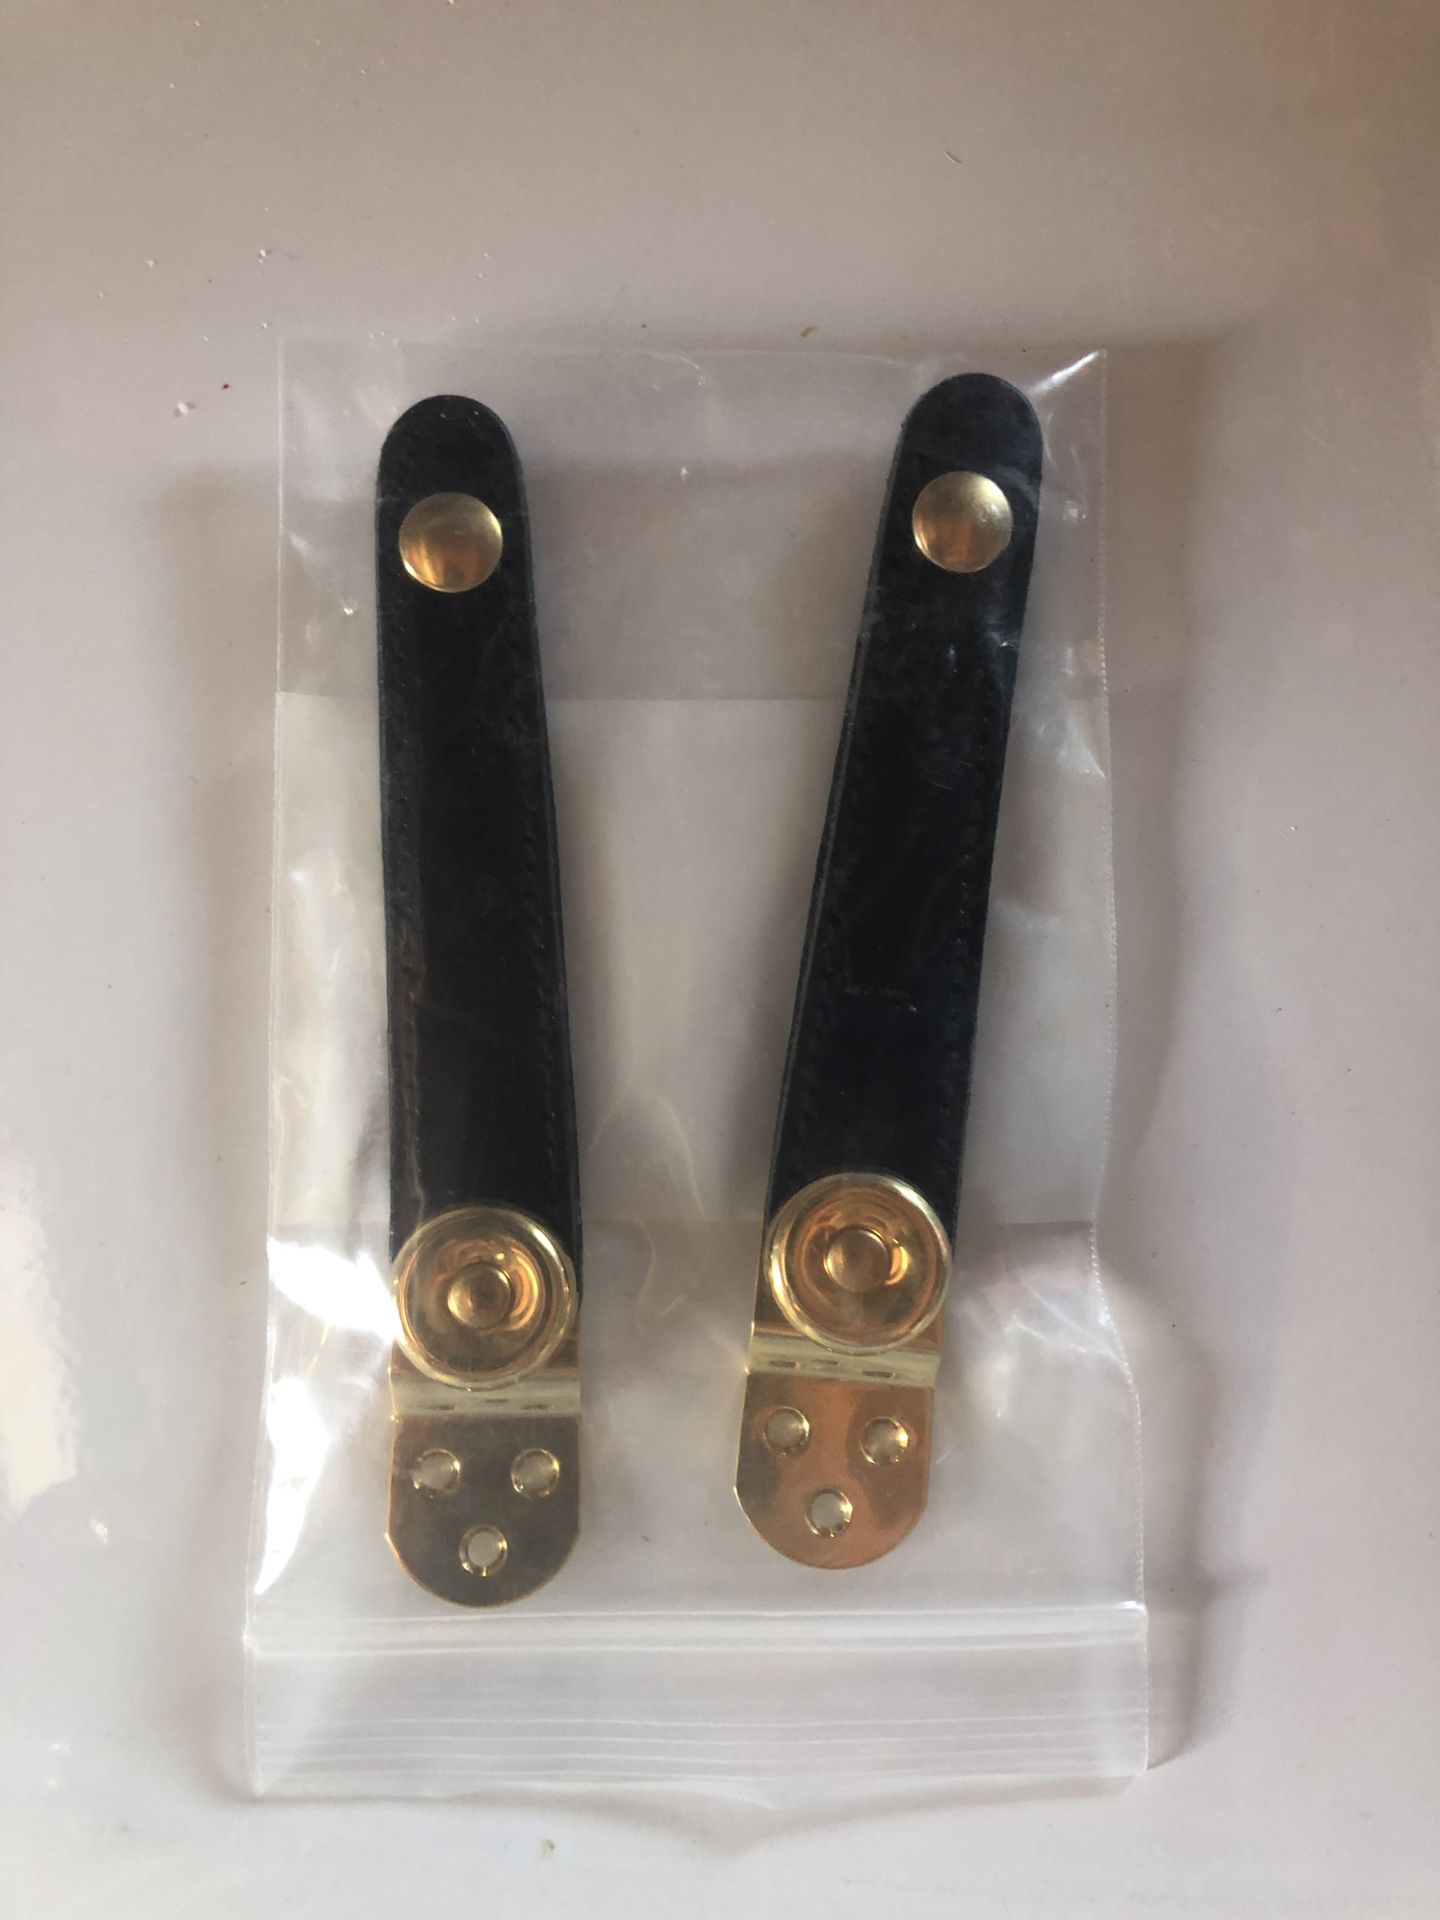 Gabbanelli Italian leather bellow straps (gold metal)